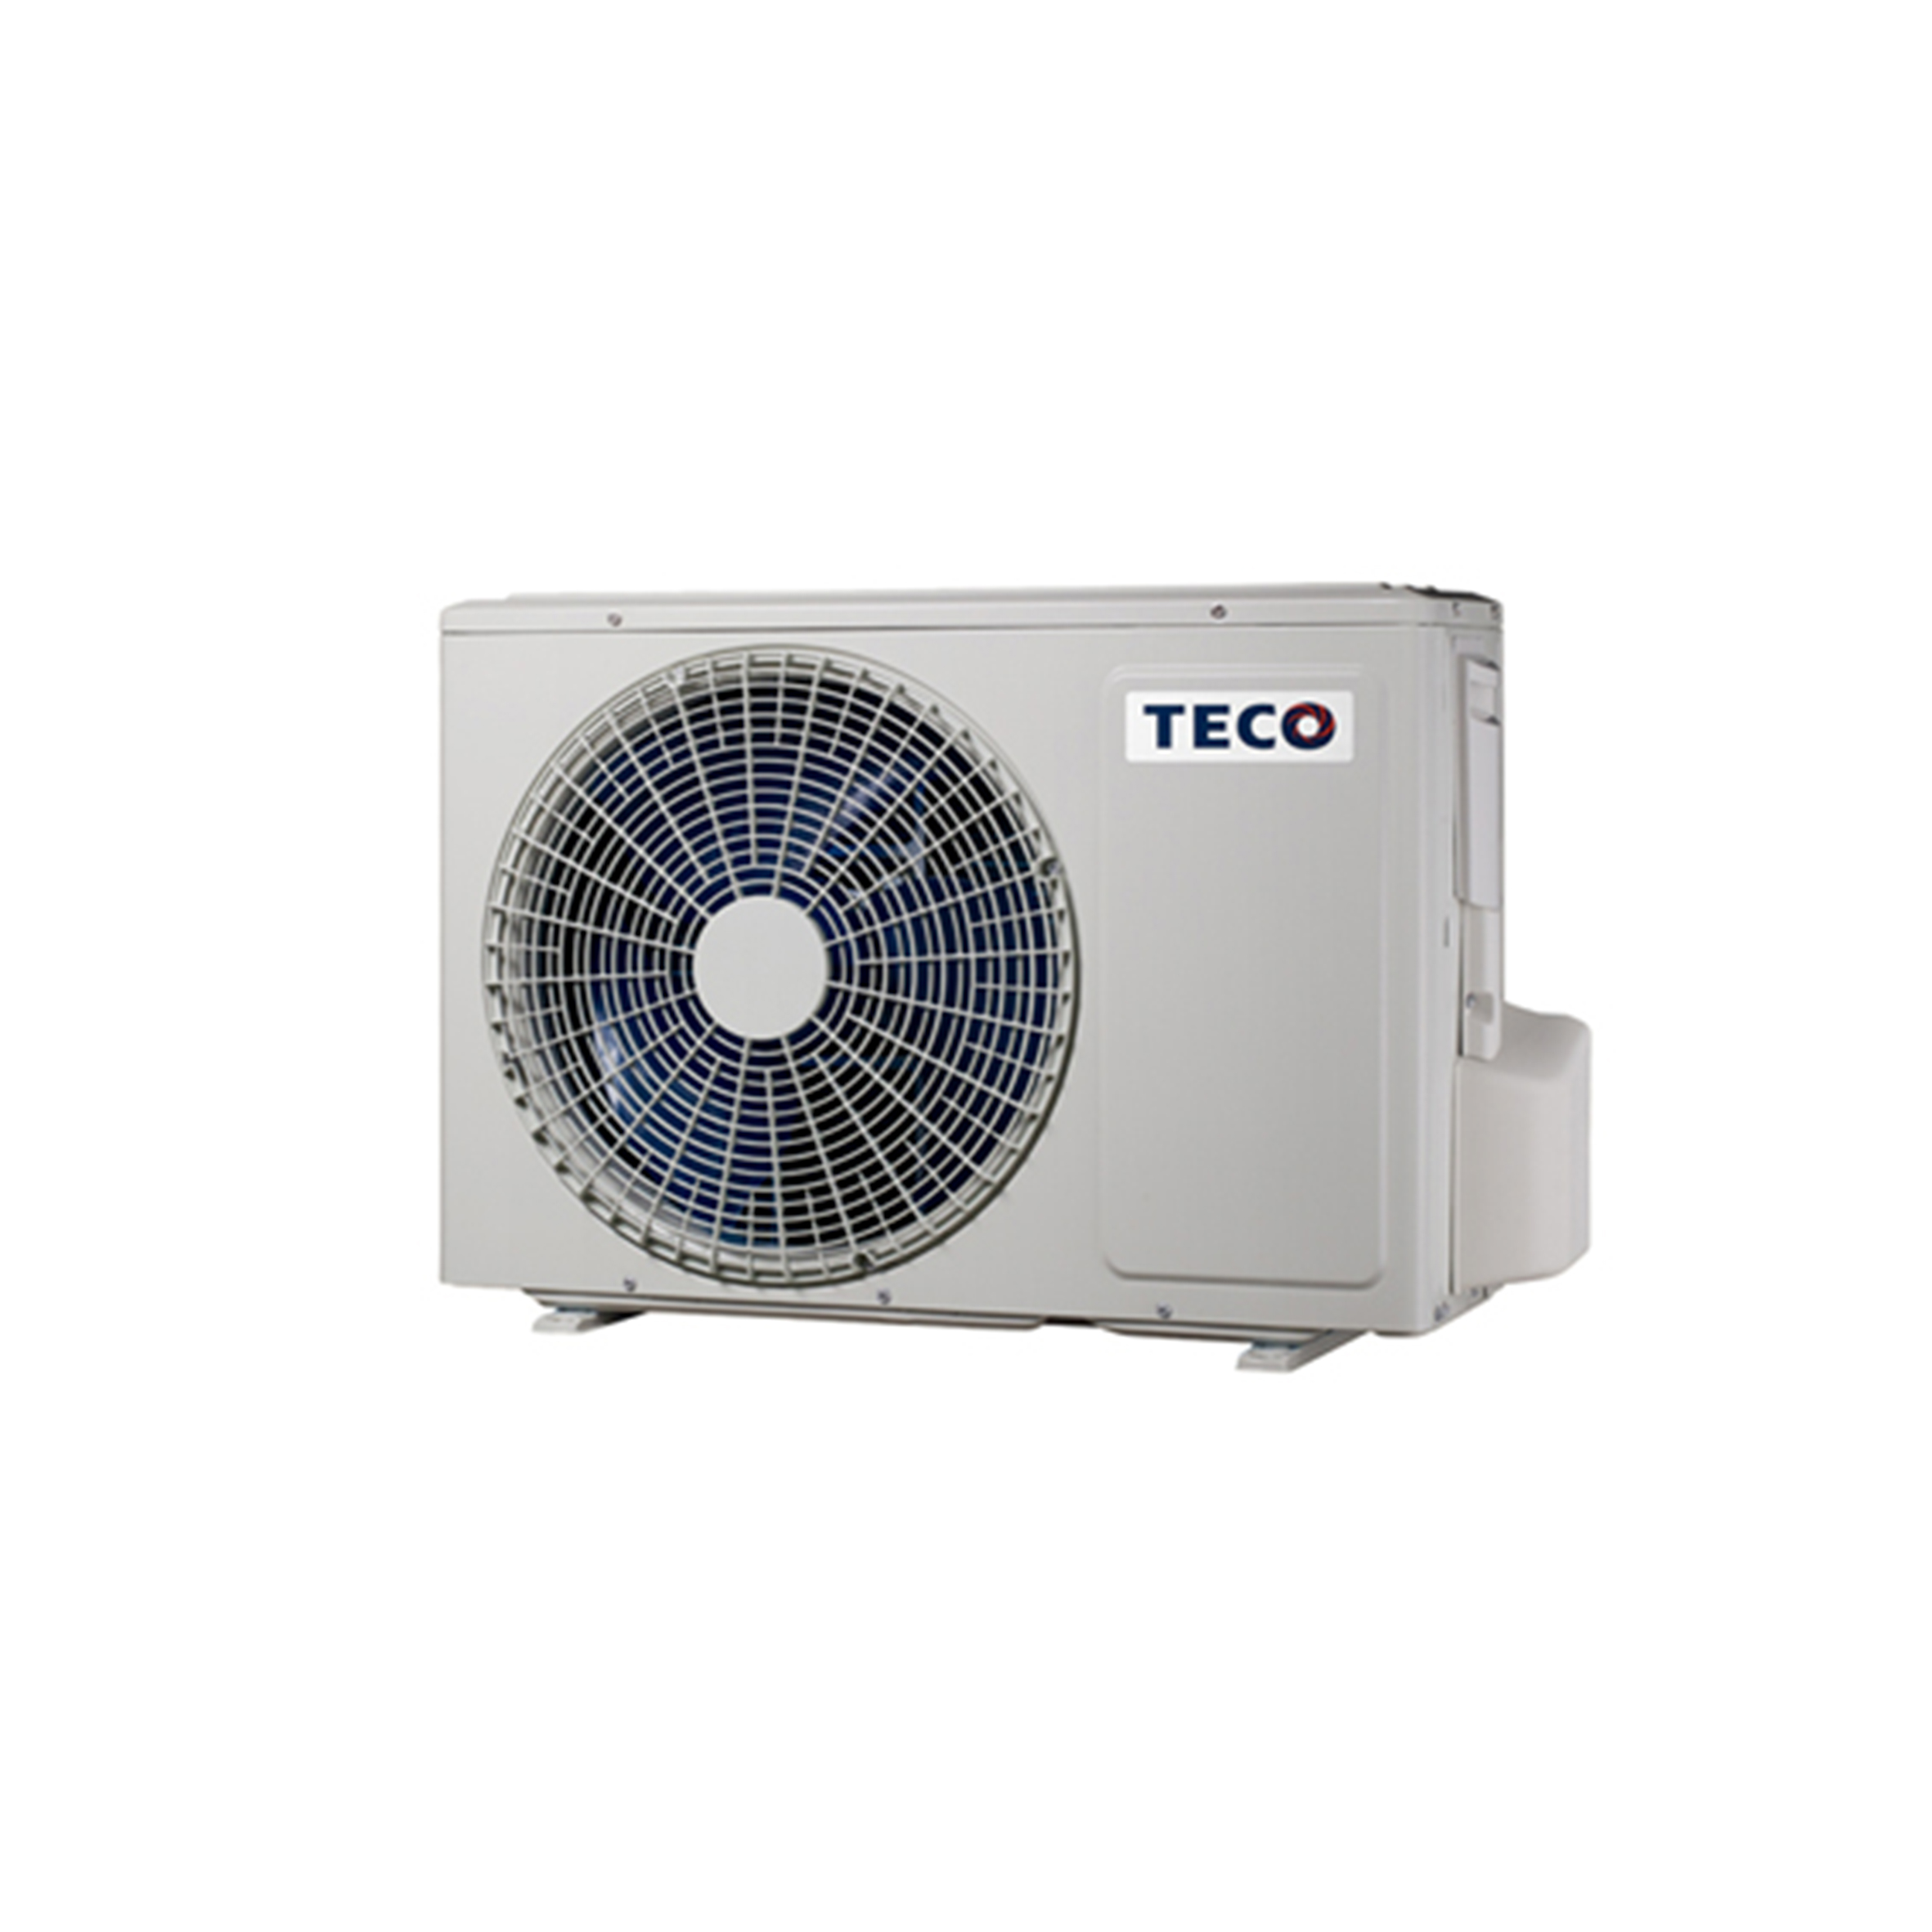 TECO東元 變頻冷暖空調MS22IH-ZR MA22IH-ZR 3-4坪 免卡分期